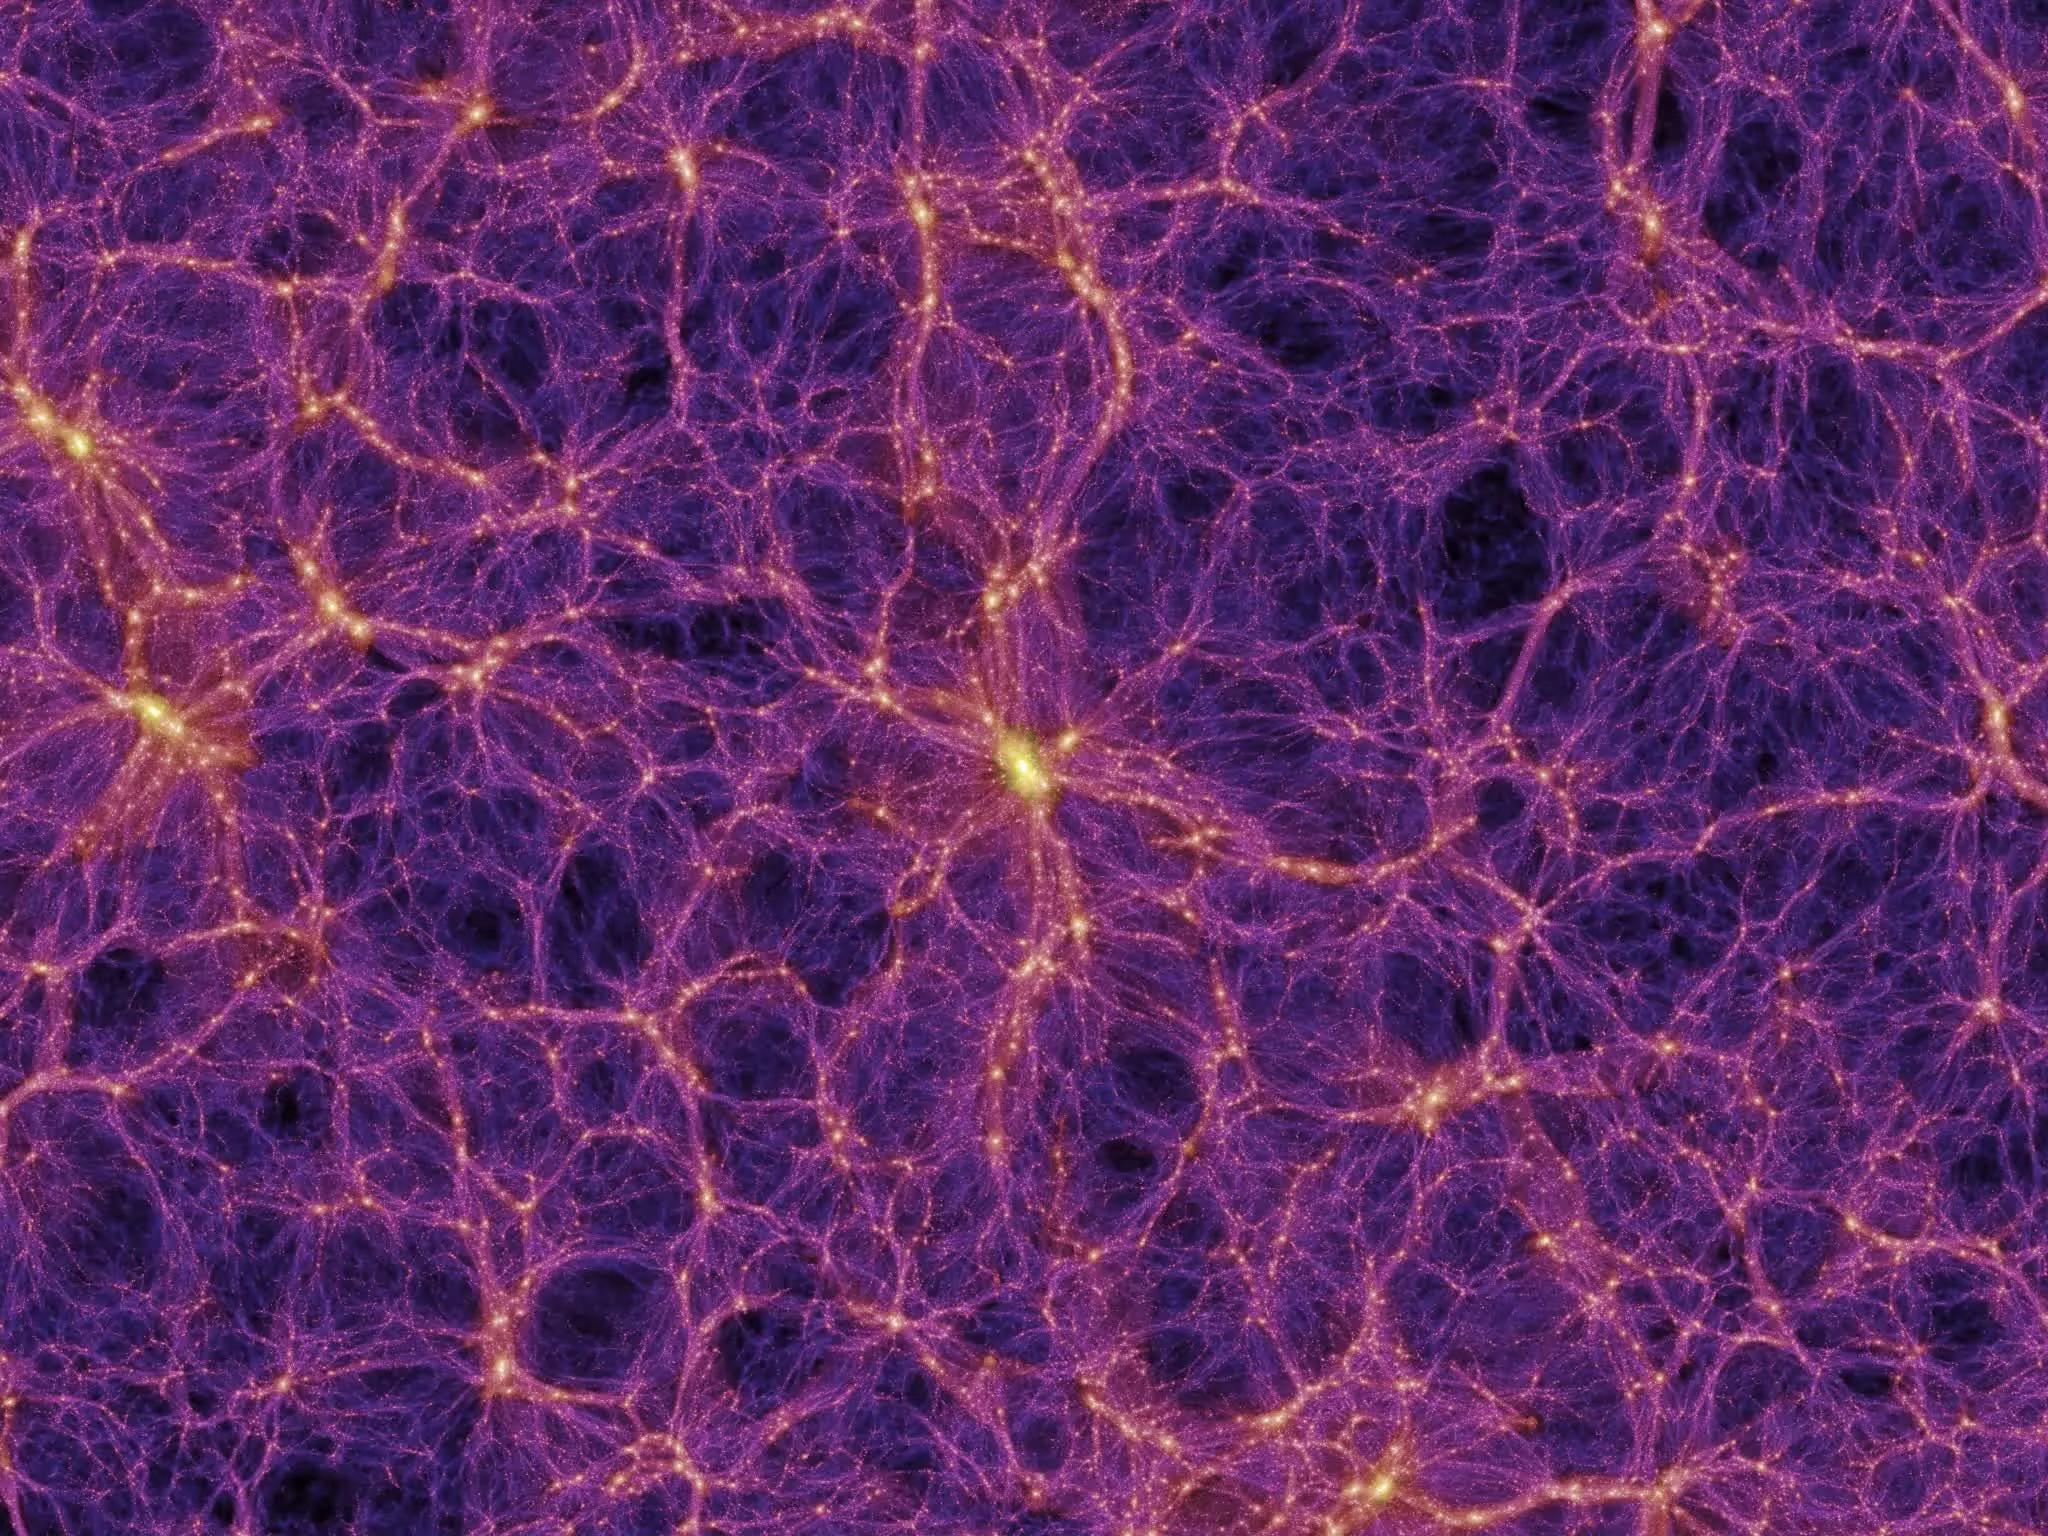 New dark matter map confirms Einstein's theories about the universe